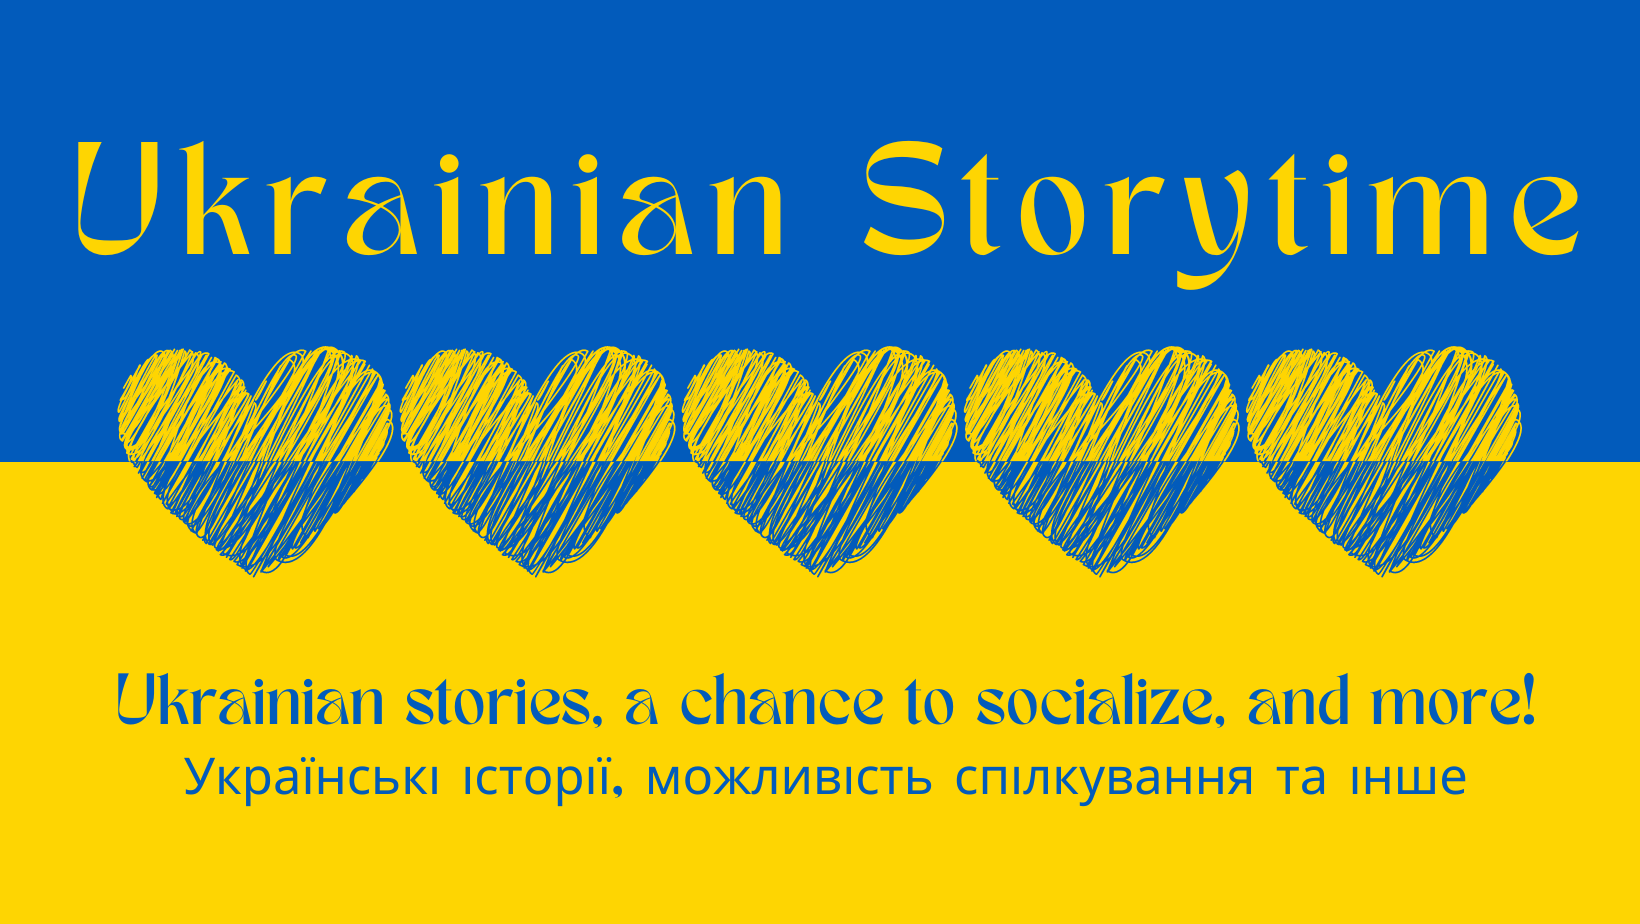 Ukrainian storytime